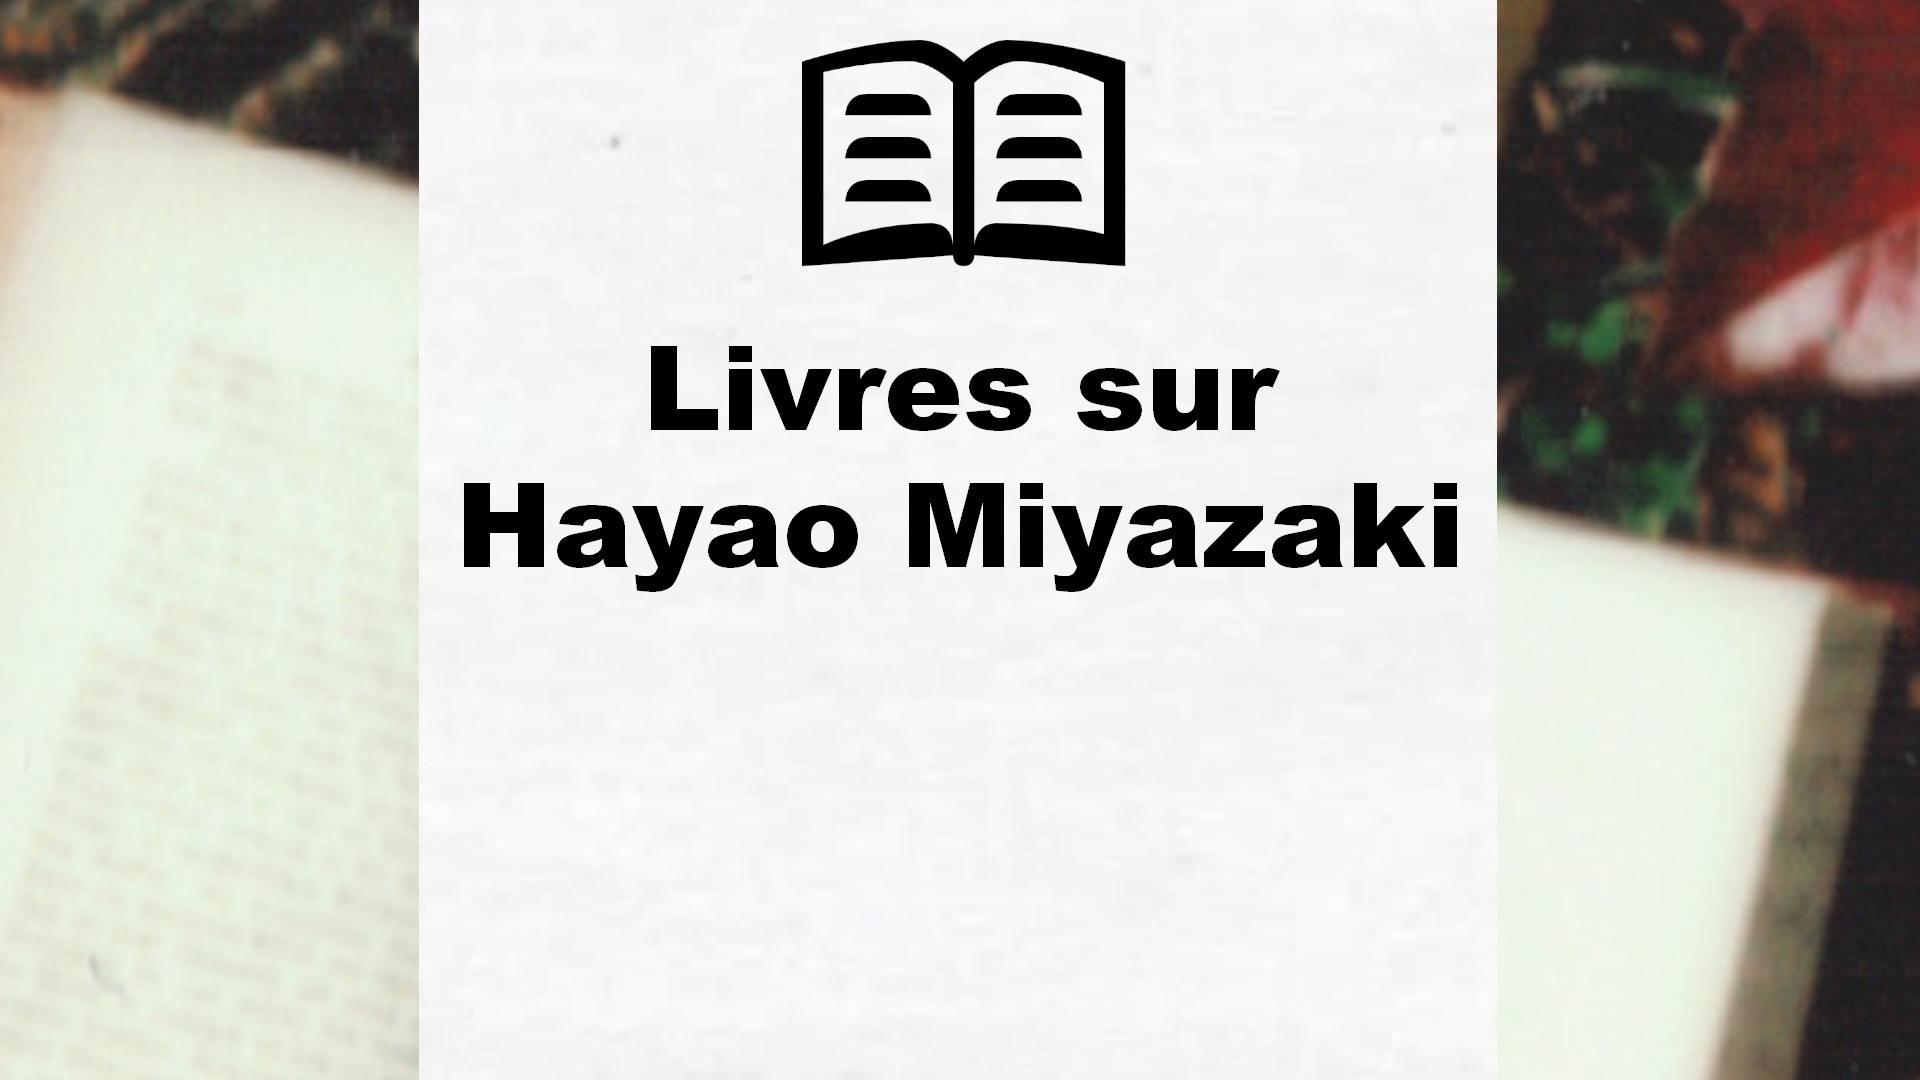 Livres sur Hayao Miyazaki